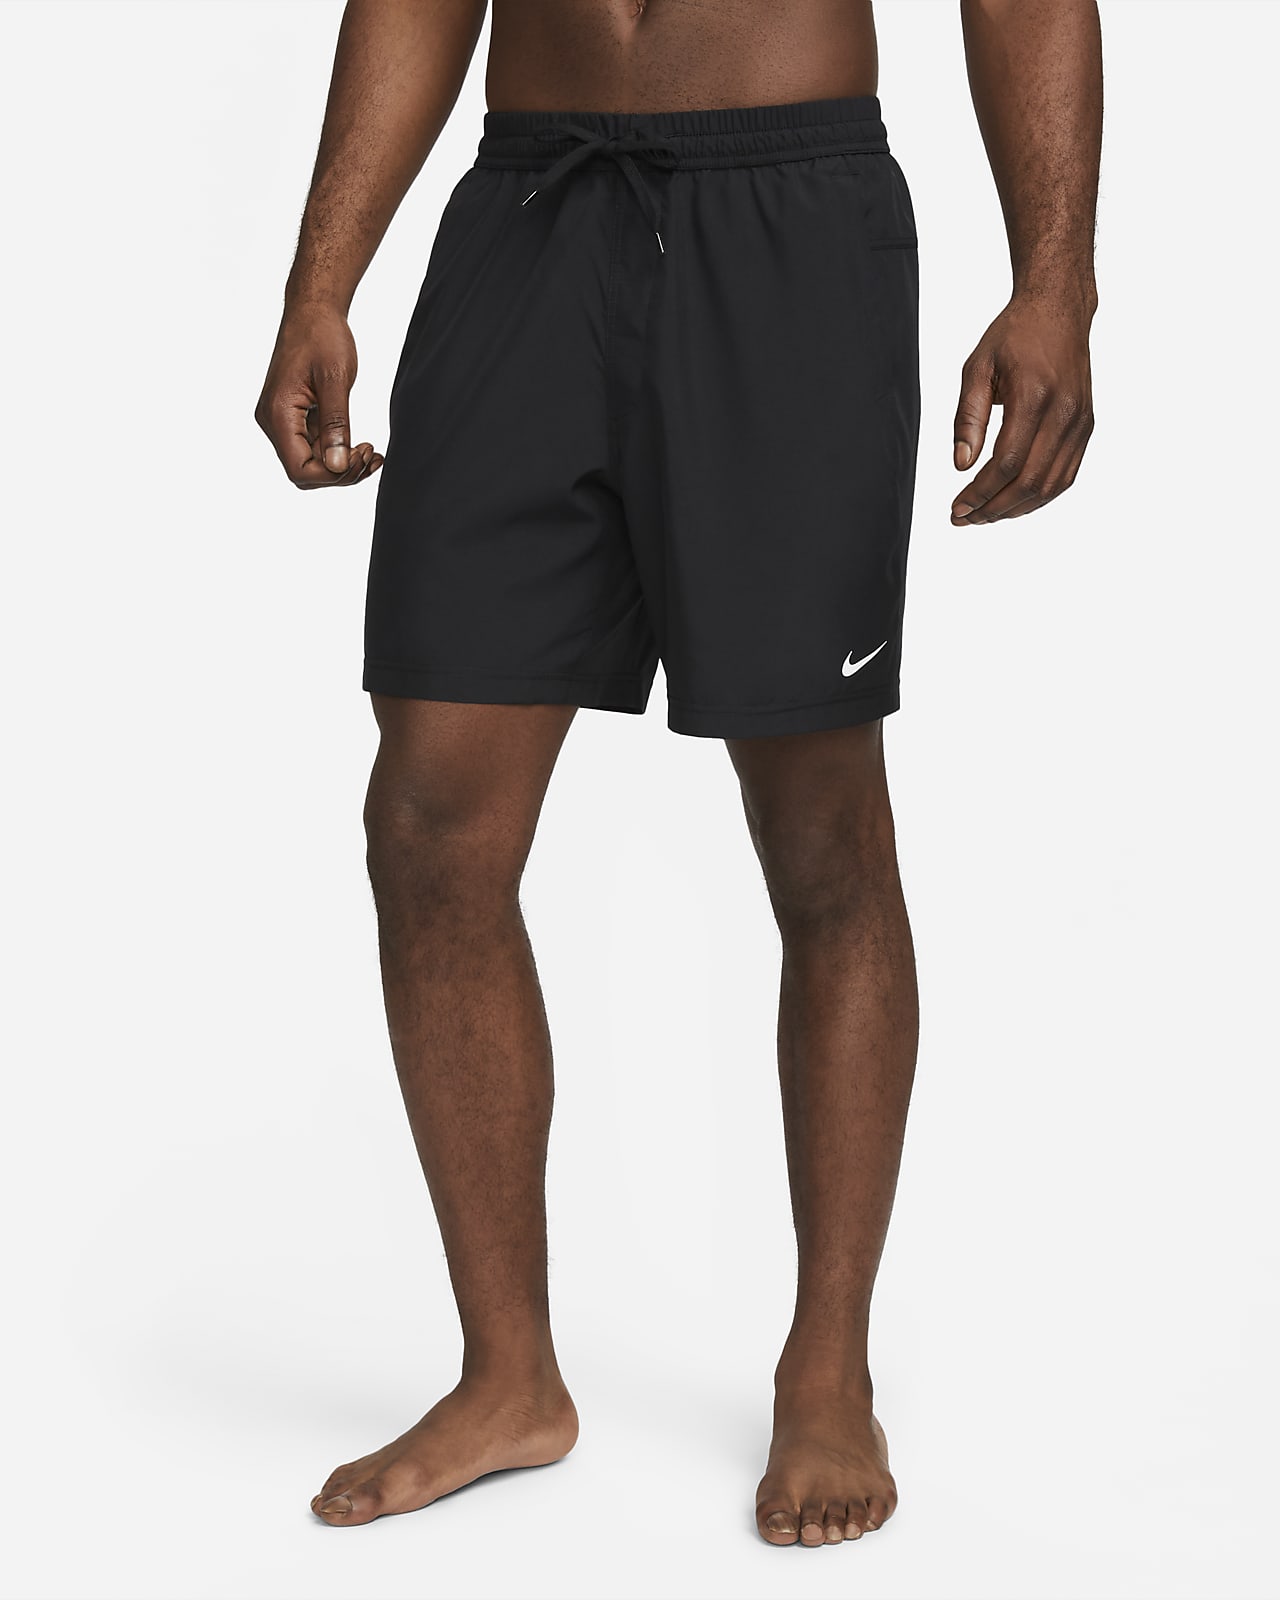 Nike Form Pantalón corto Dri-FIT versátil de 18 cm sin forro - Hombre